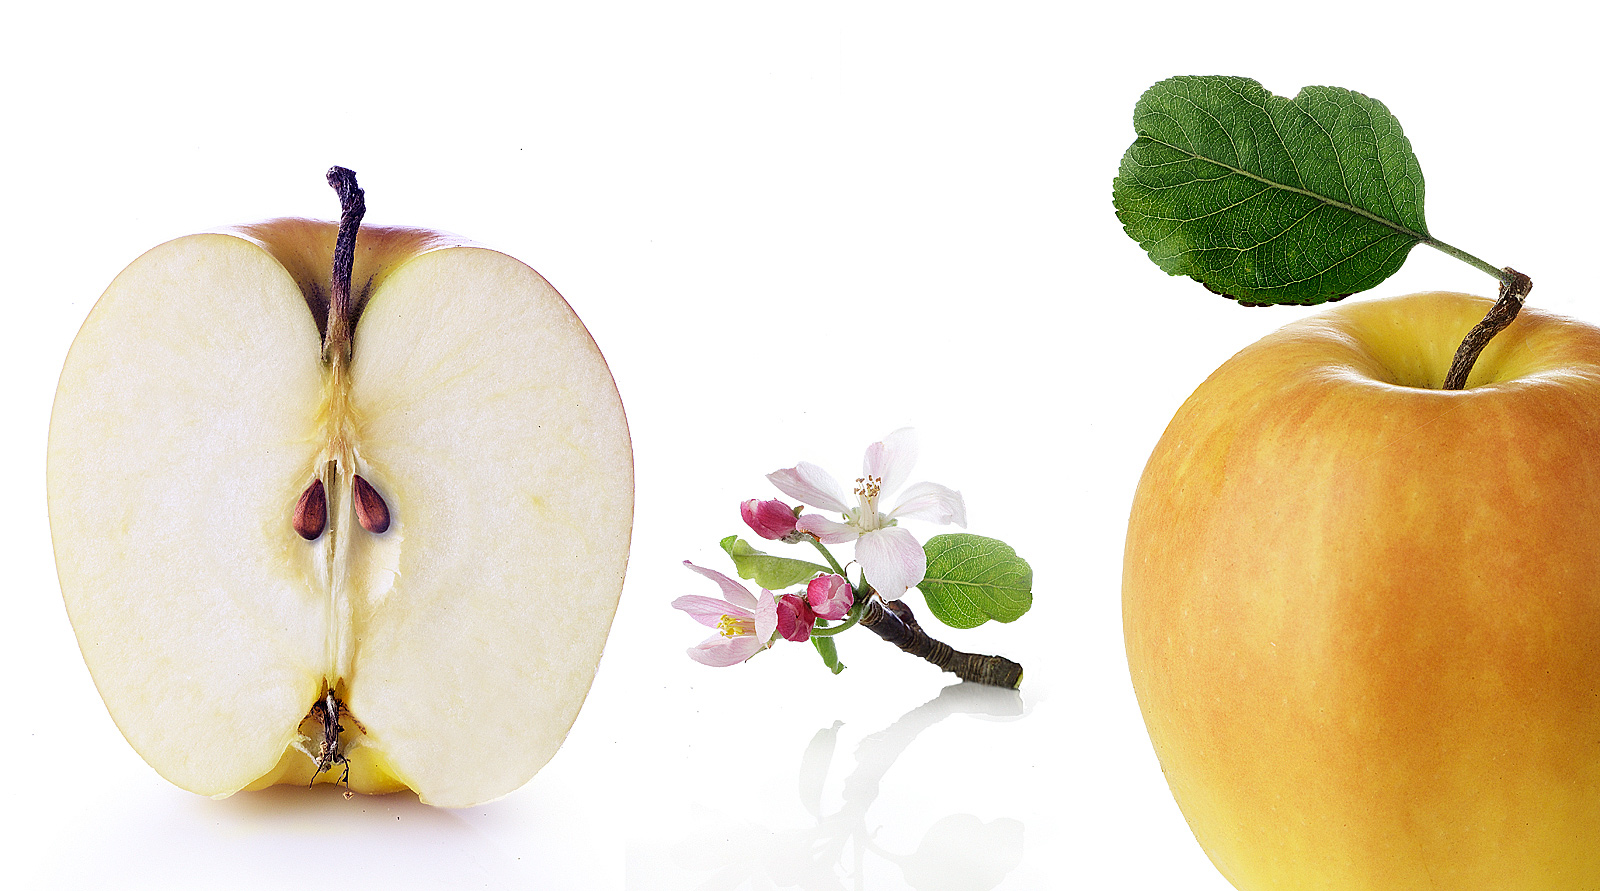 Apple- Apple slices- Apple halves- Fuji apples-  Henrique Du Tiel